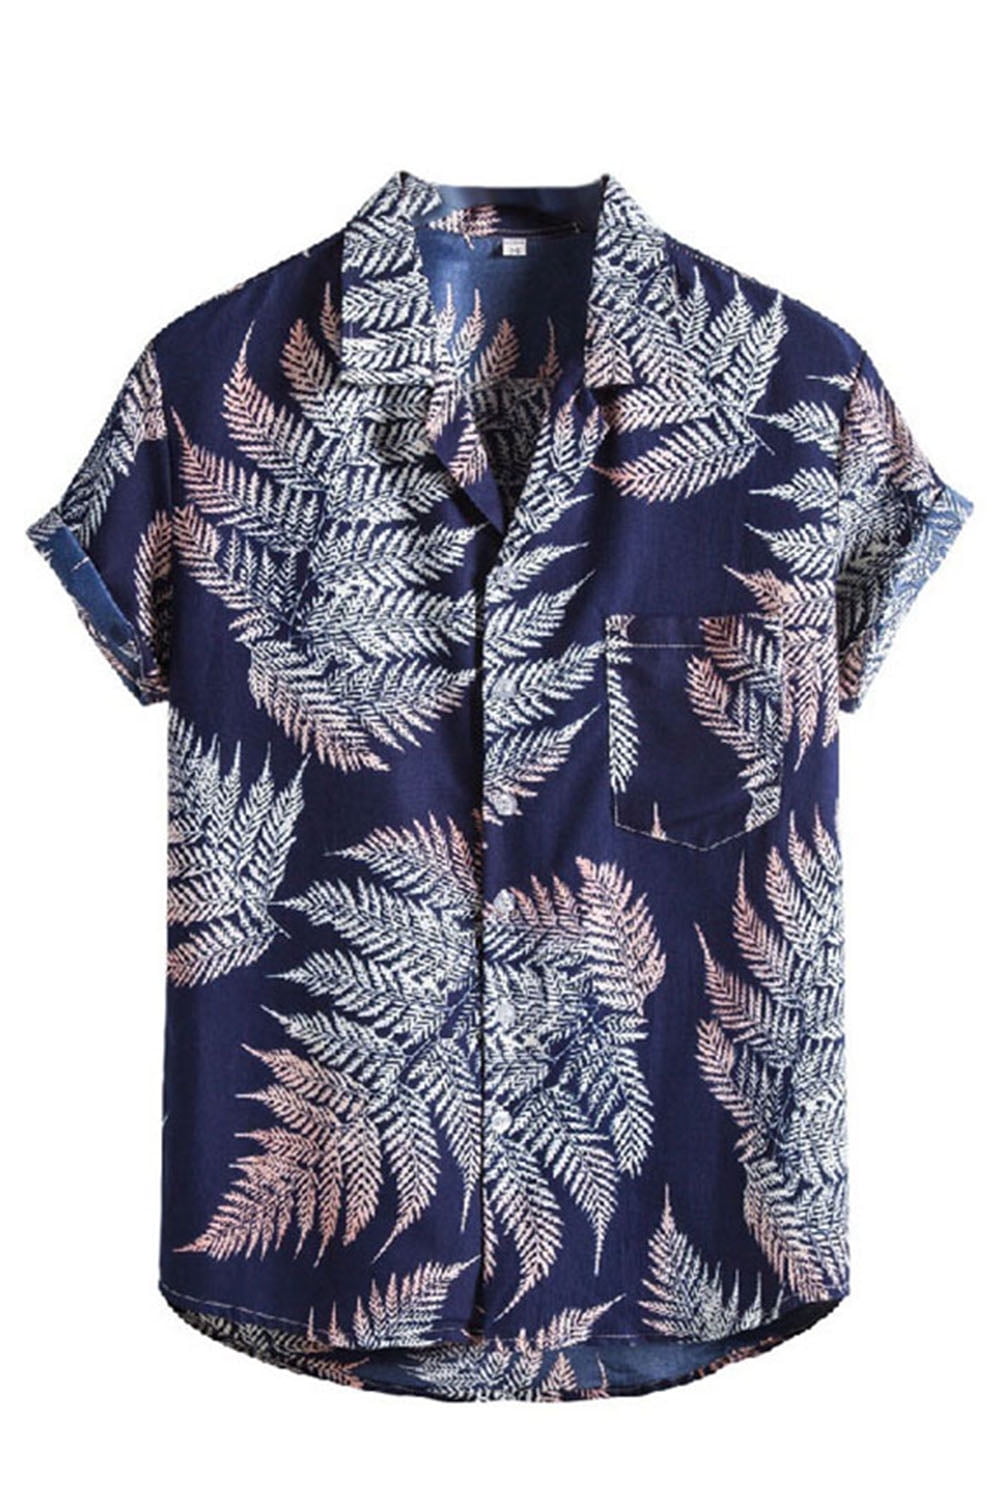 Men's Short Sleeve Hawaiian Casual Loose T Shirts Summer Beach Party Cool Blouse